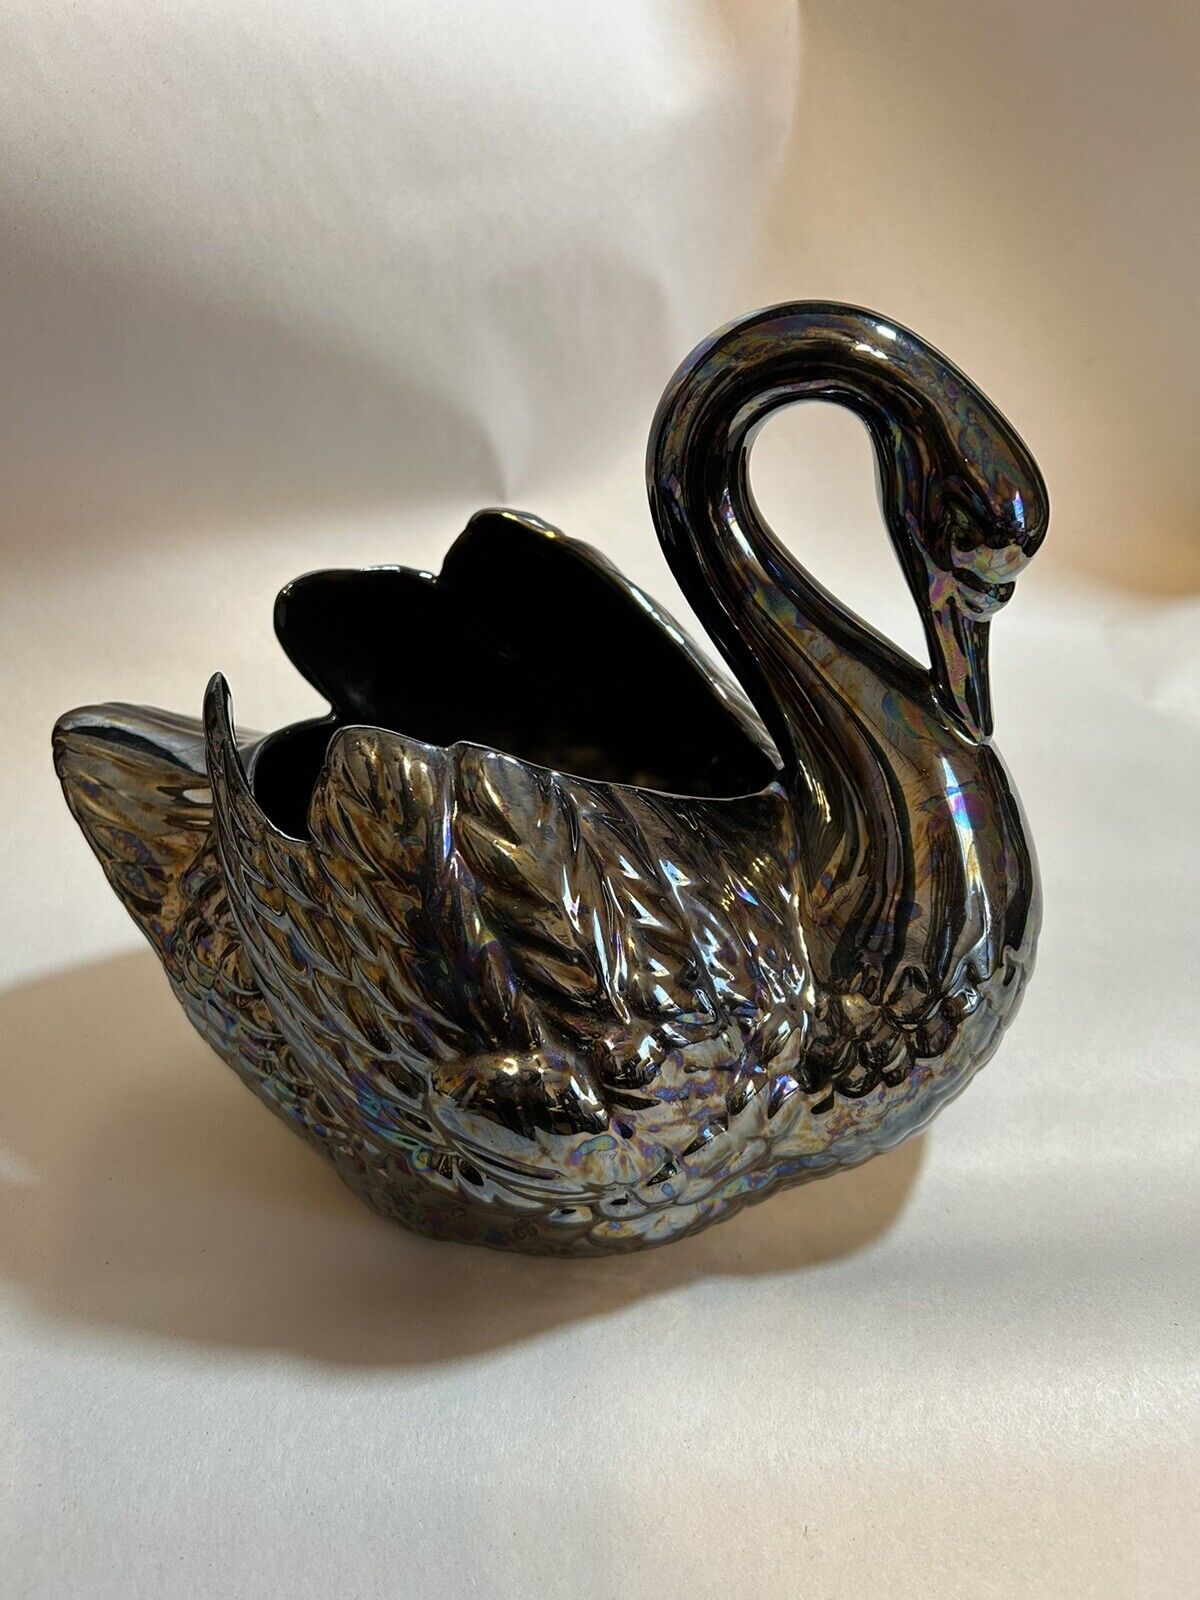 Swan Planter Vase Iridescent Black Ceramic Similar to Holland Mold But Bigger